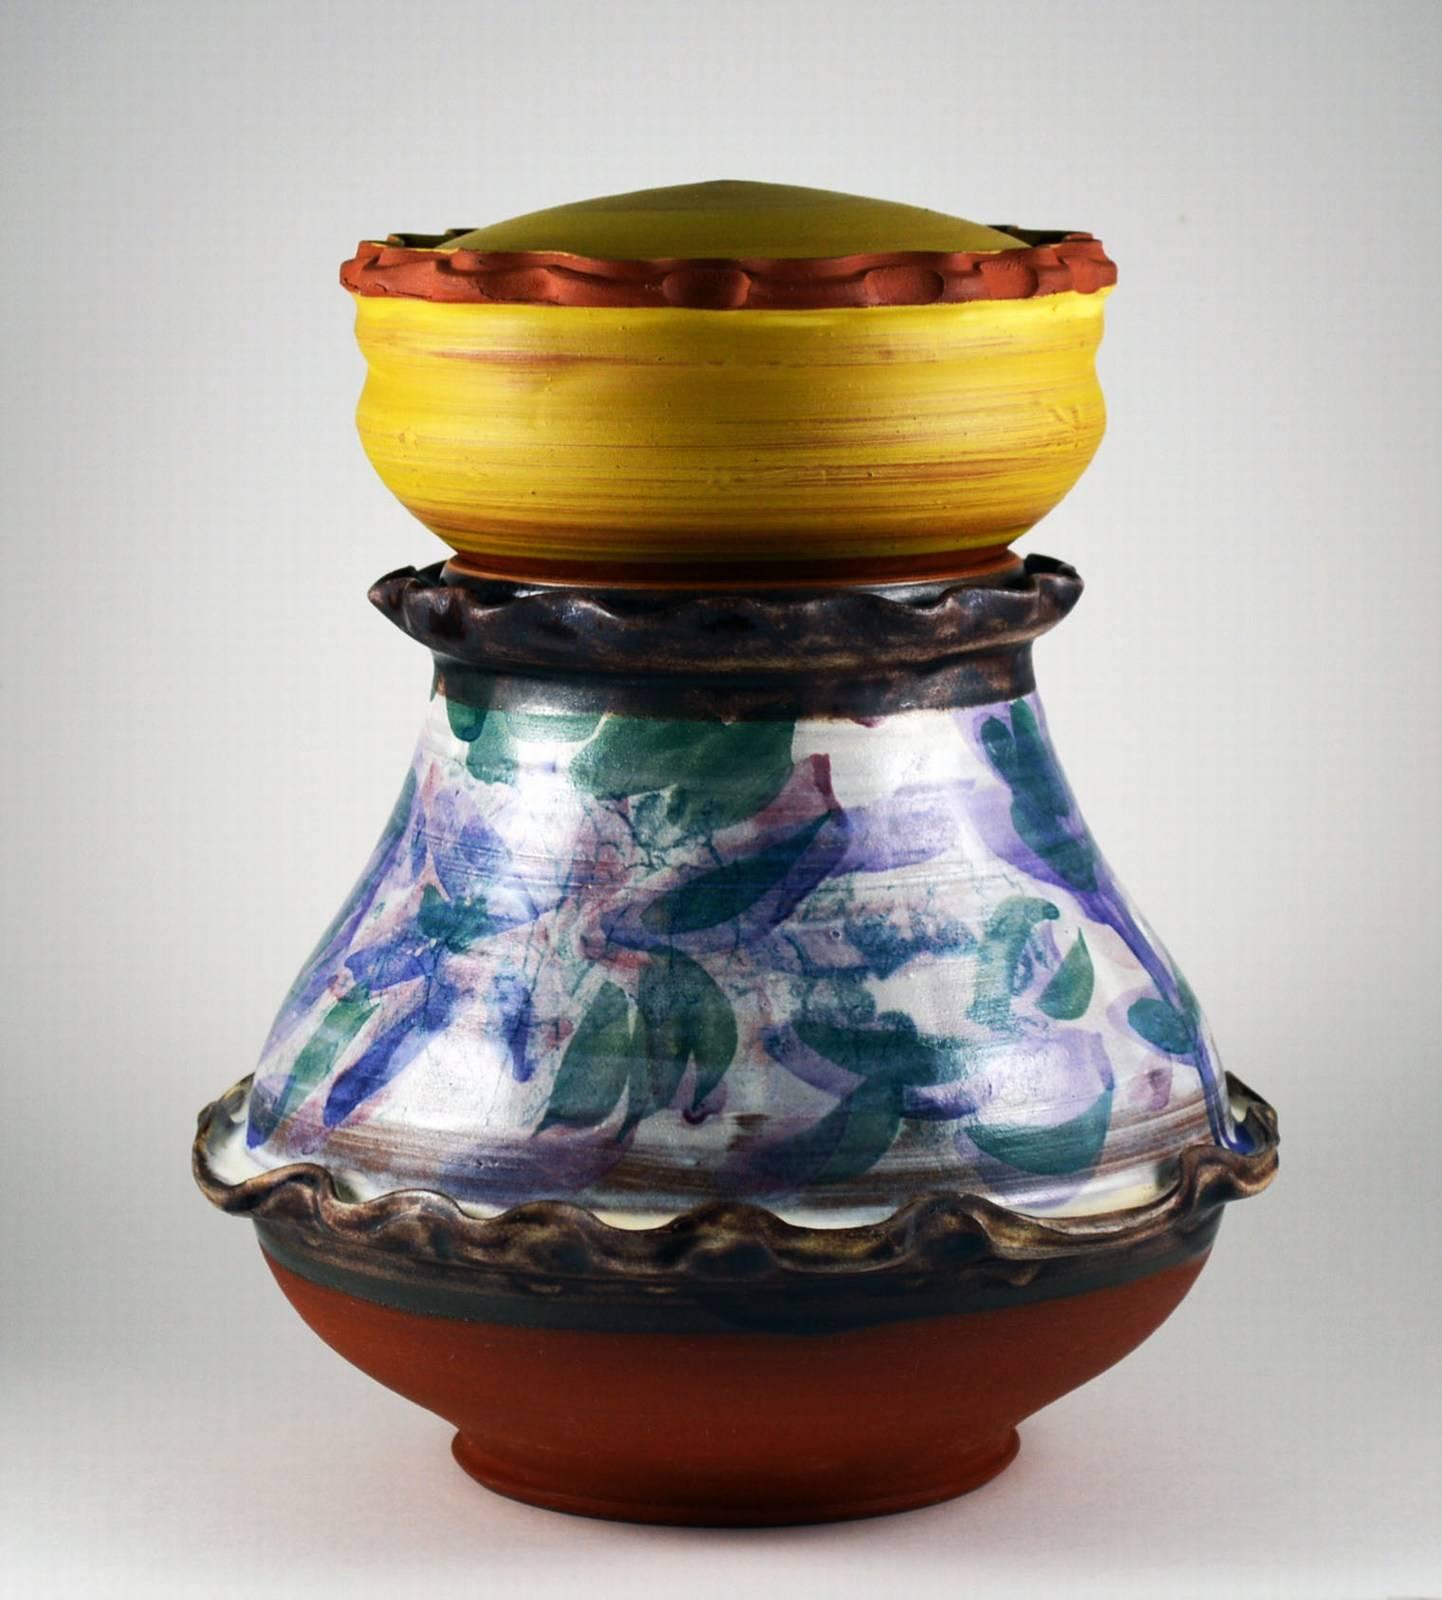 Mariko Brown Harkin Figurative Sculpture - Sweets Jar